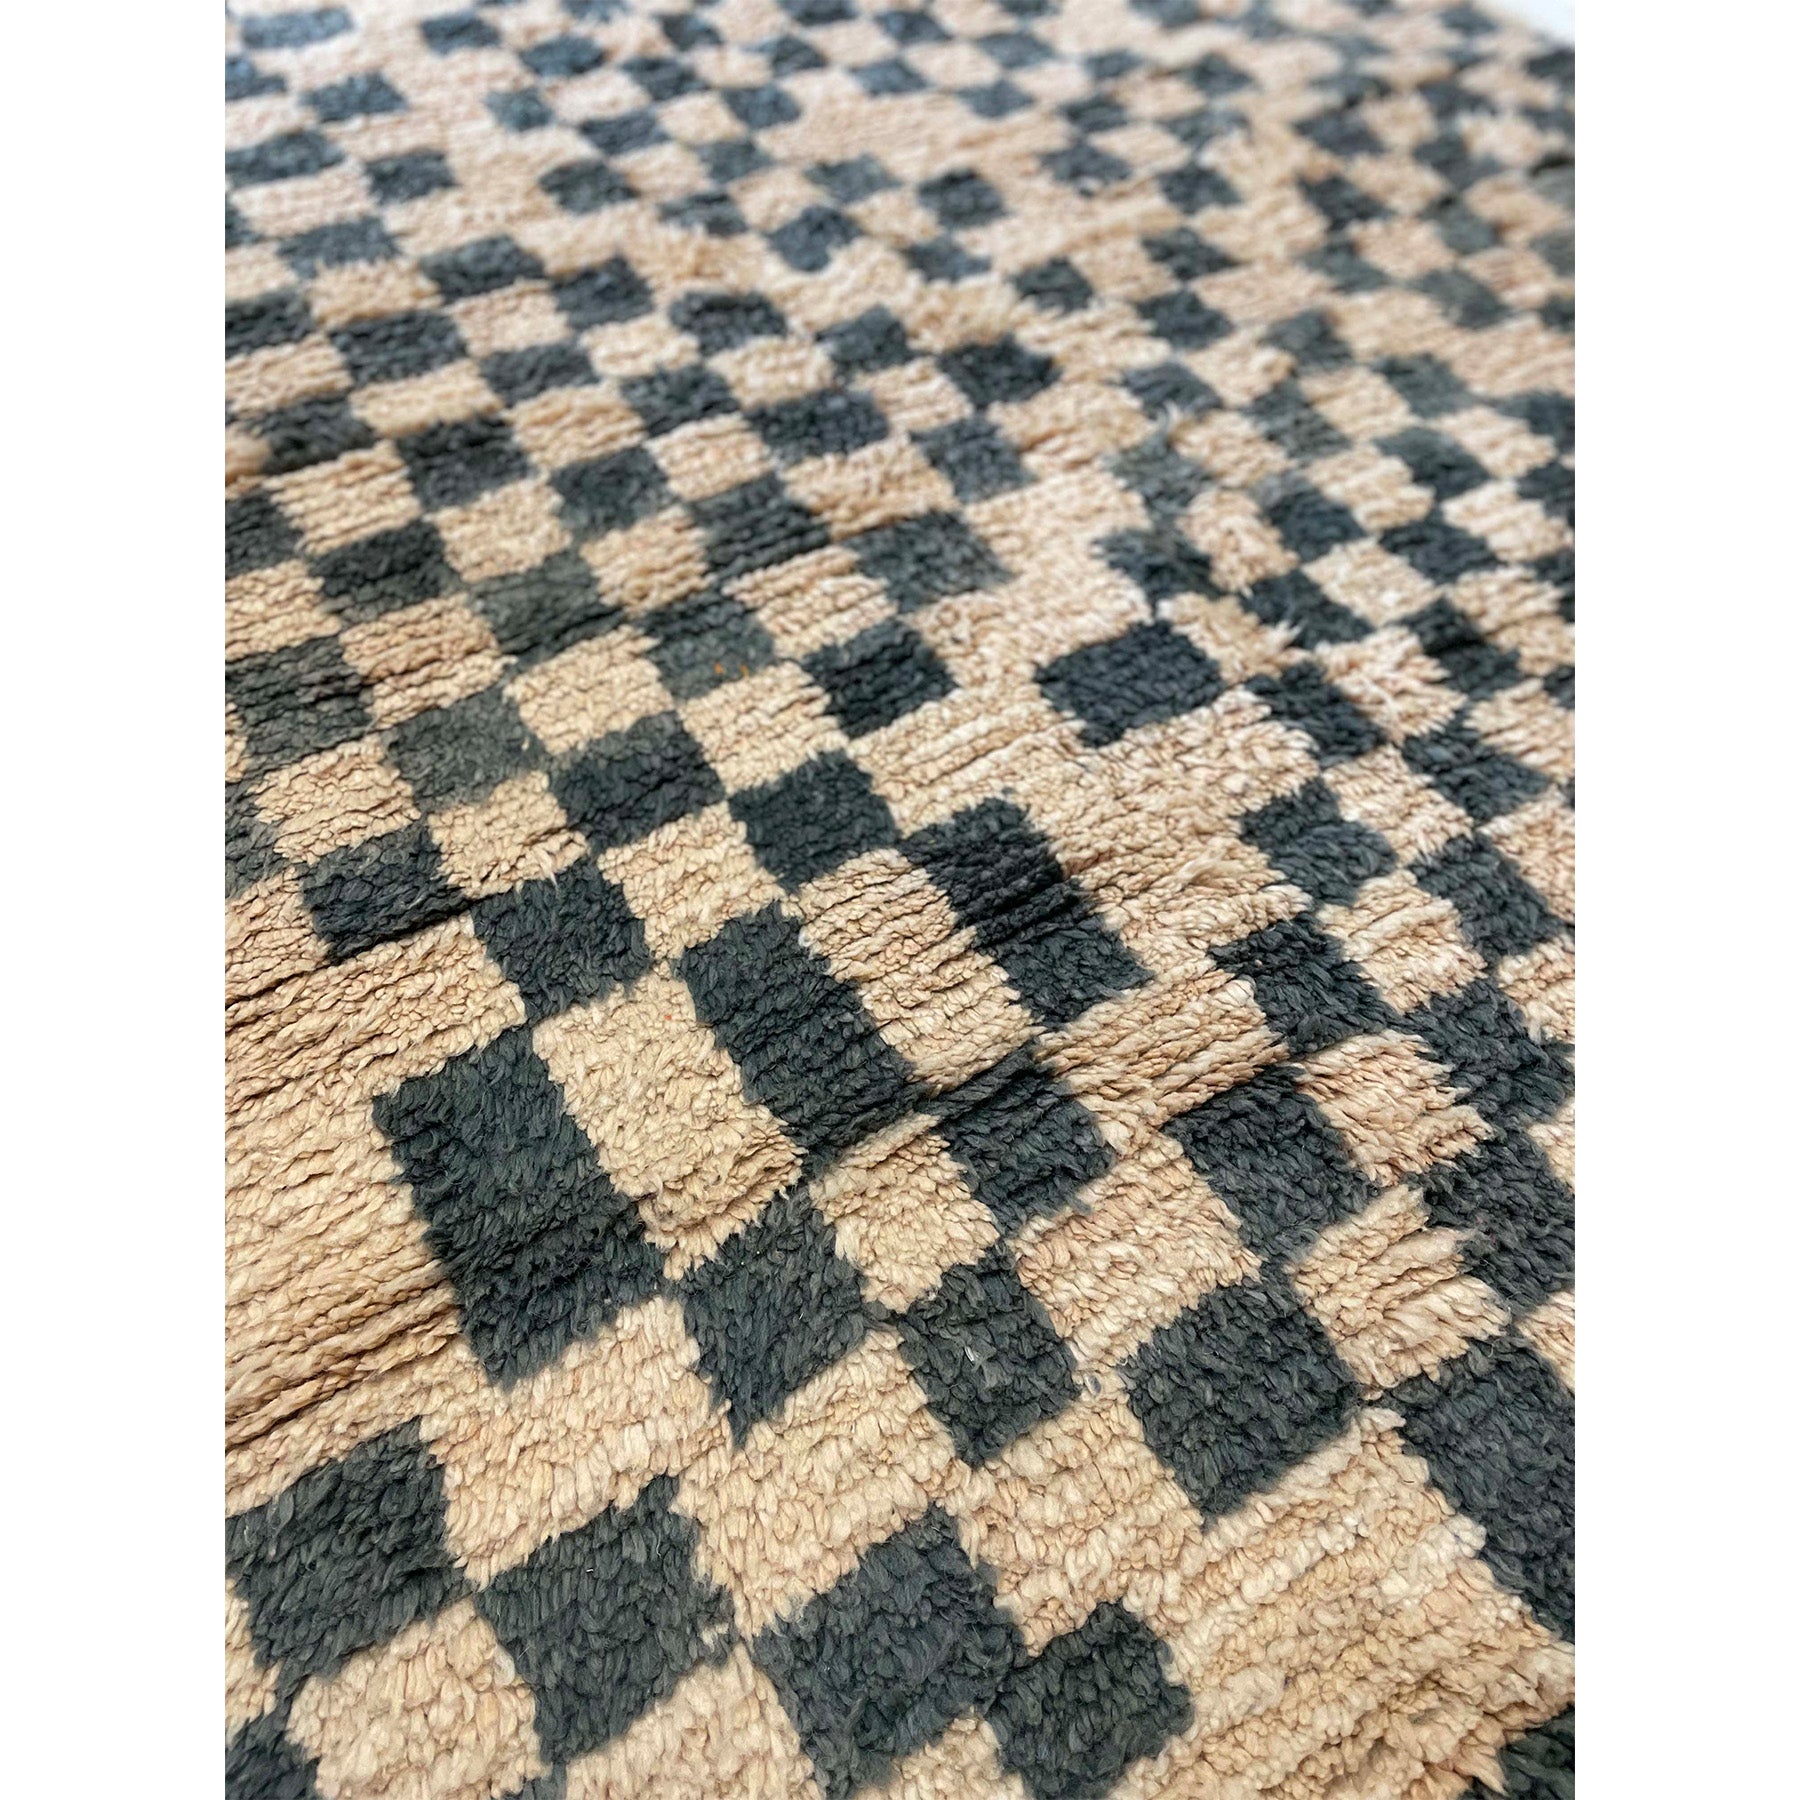 Black and white Moroccan berber checkered area rug - Kantara | Moroccan Rugs